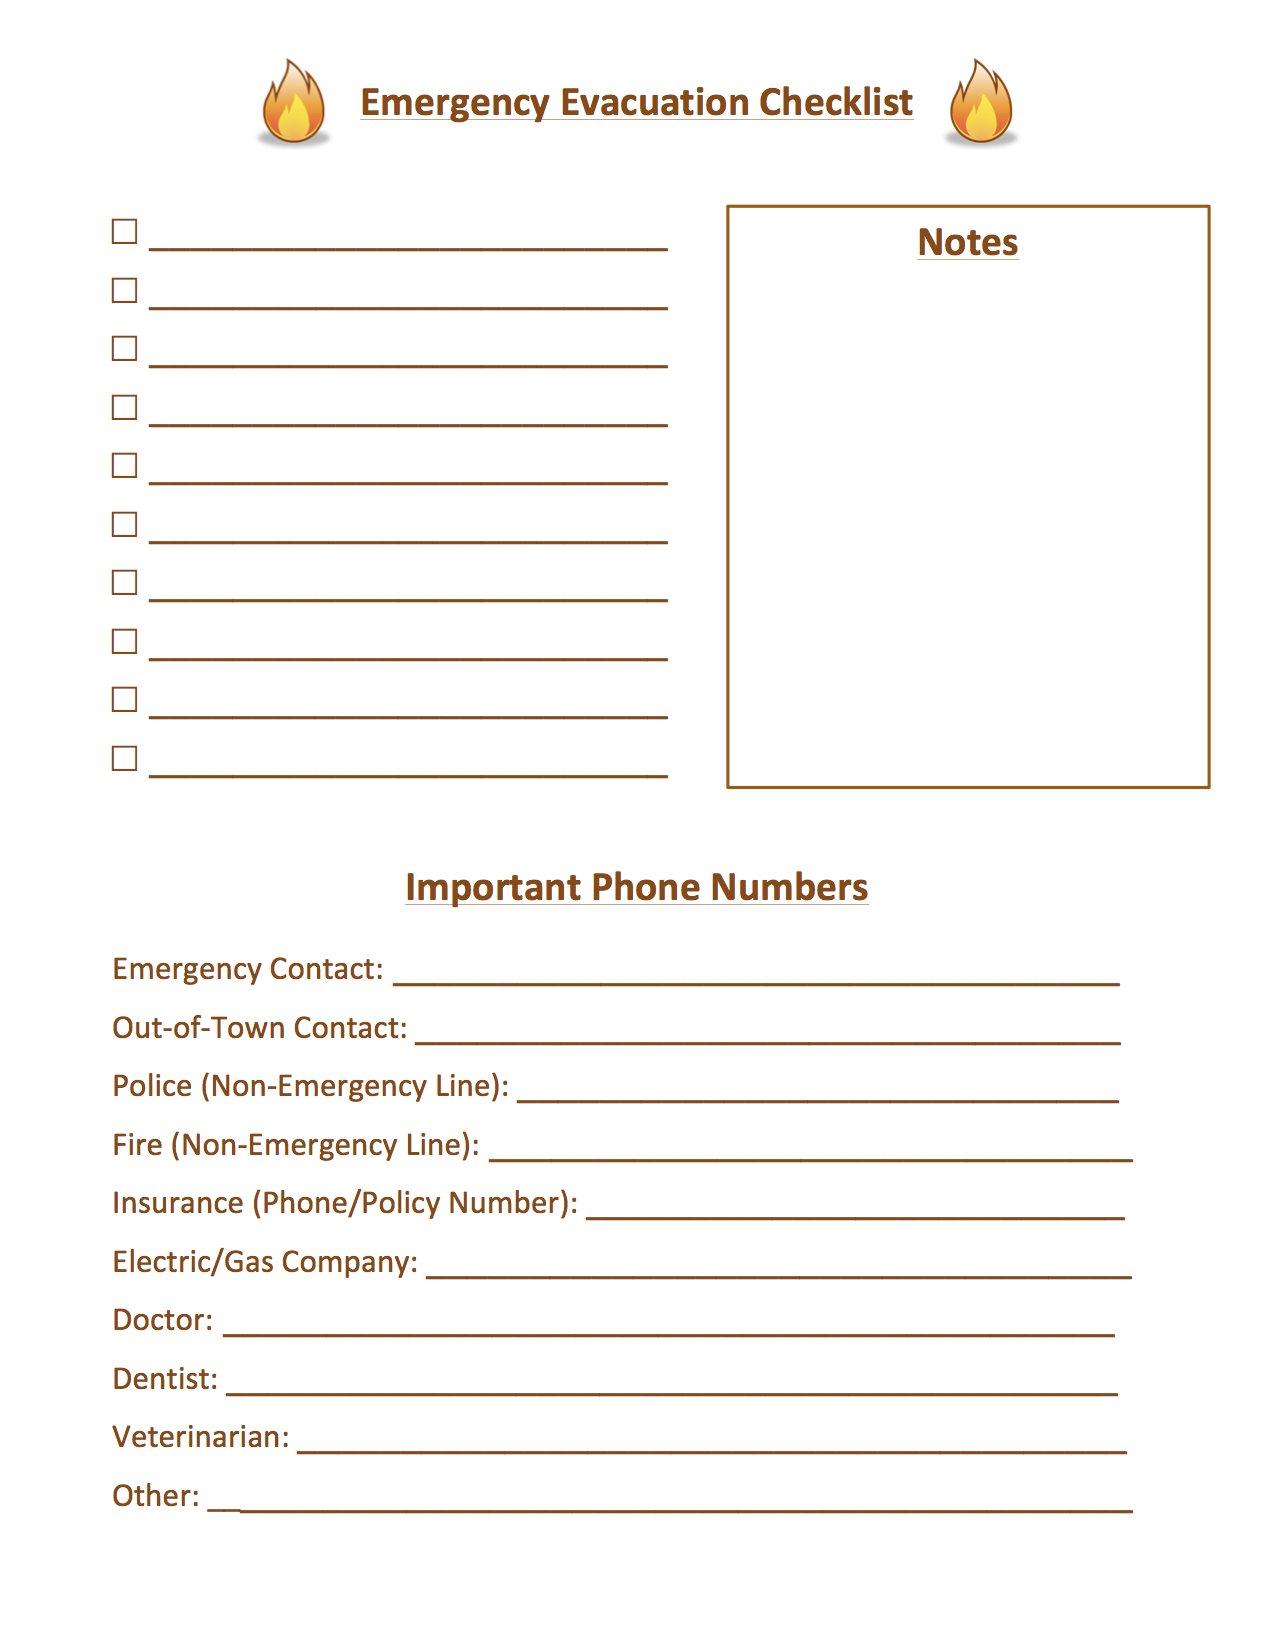 Emergency Evacuation Checklist  HMH Designs With Regard To Fire Evacuation Checklist Template In Fire Evacuation Checklist Template